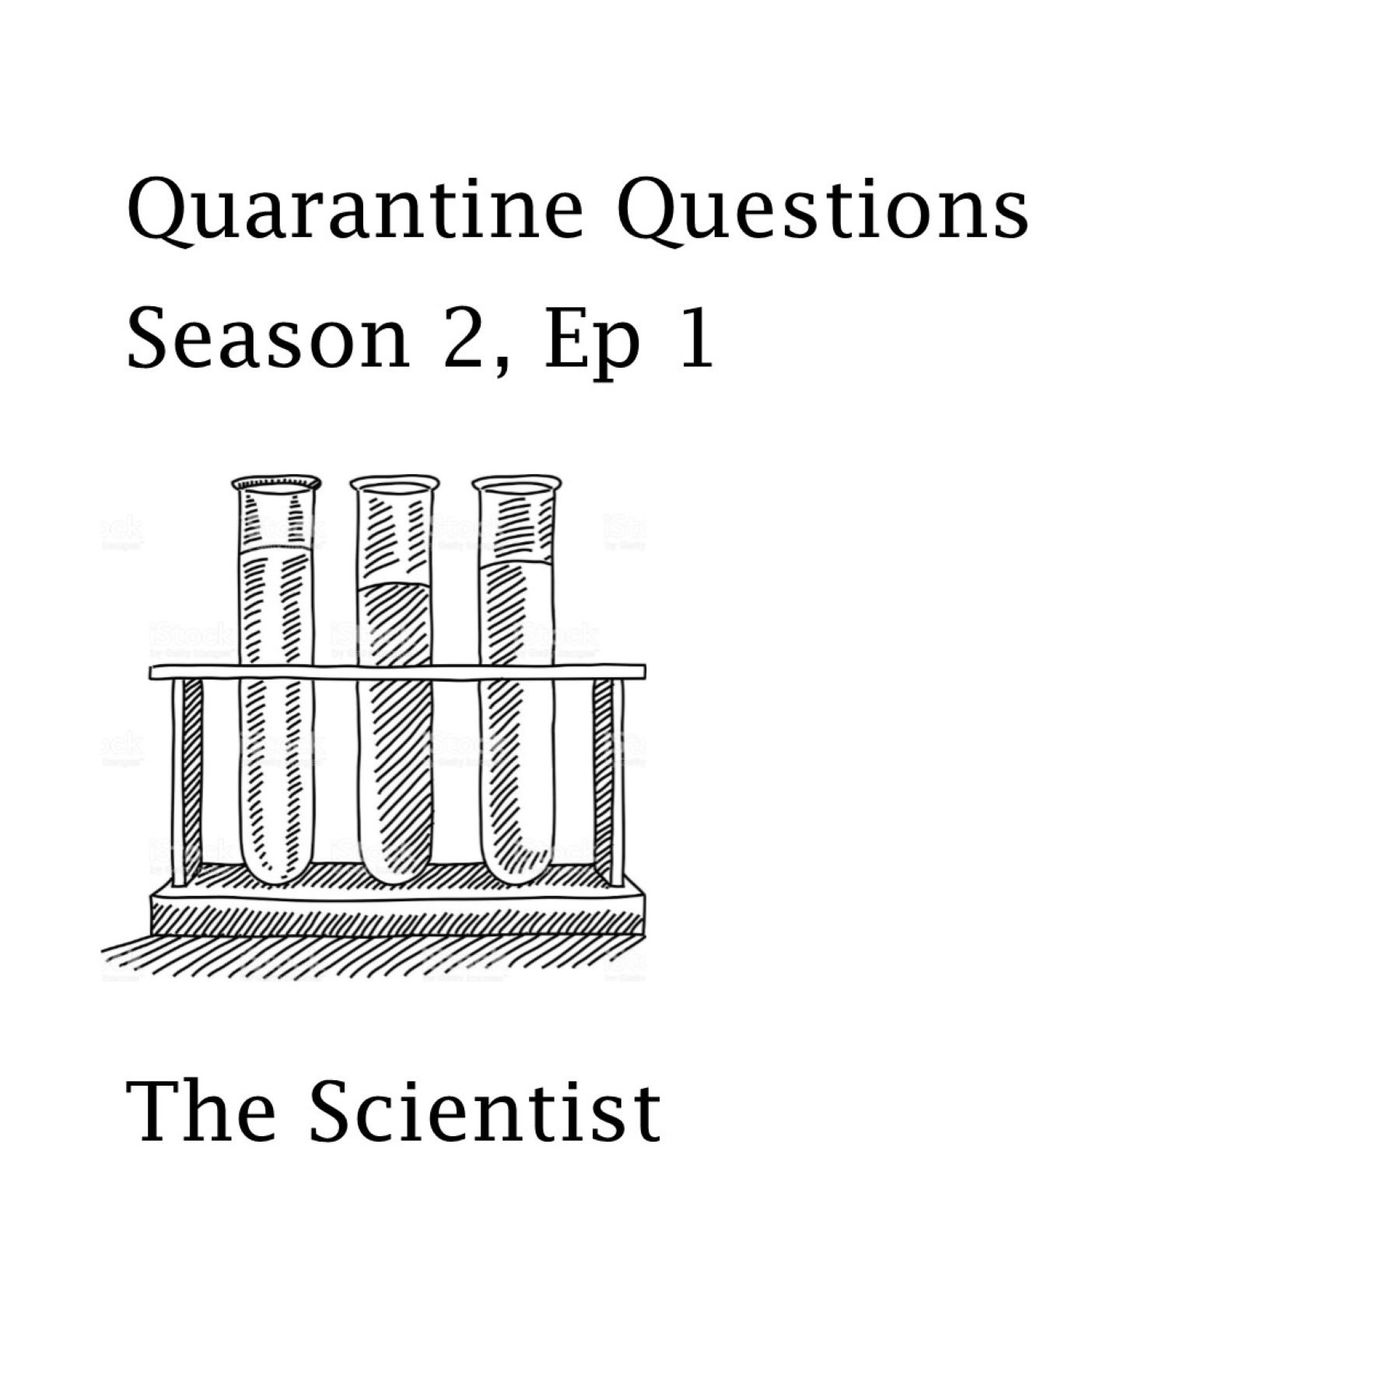 Season 2, Ep 1:  The Scientist